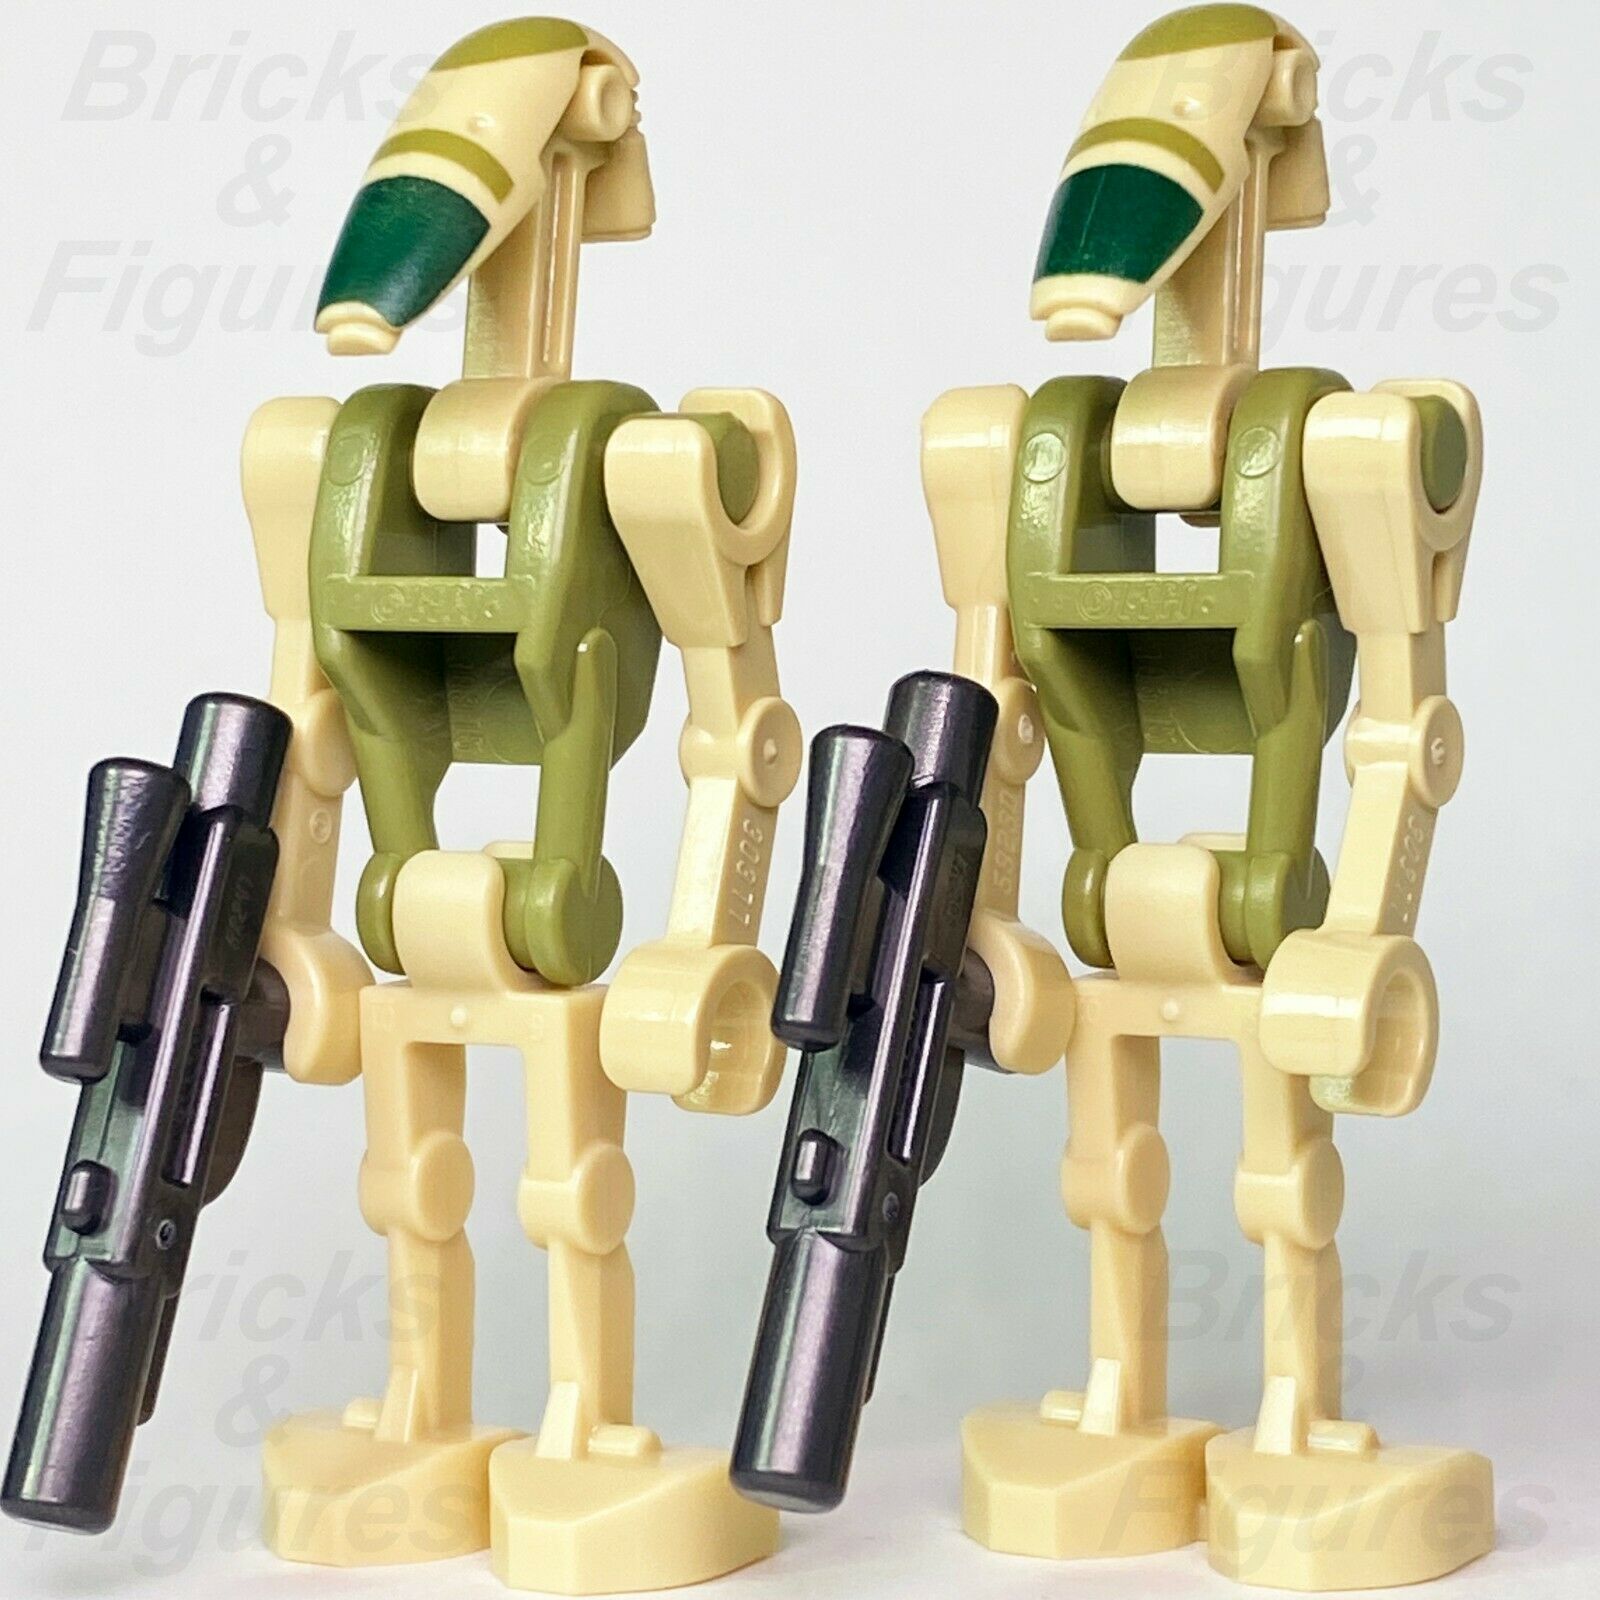 2 x Star Wars LEGO Kashyyyk Battle Droid Minifigure from sets 75234 75233 75283 - Bricks & Figures